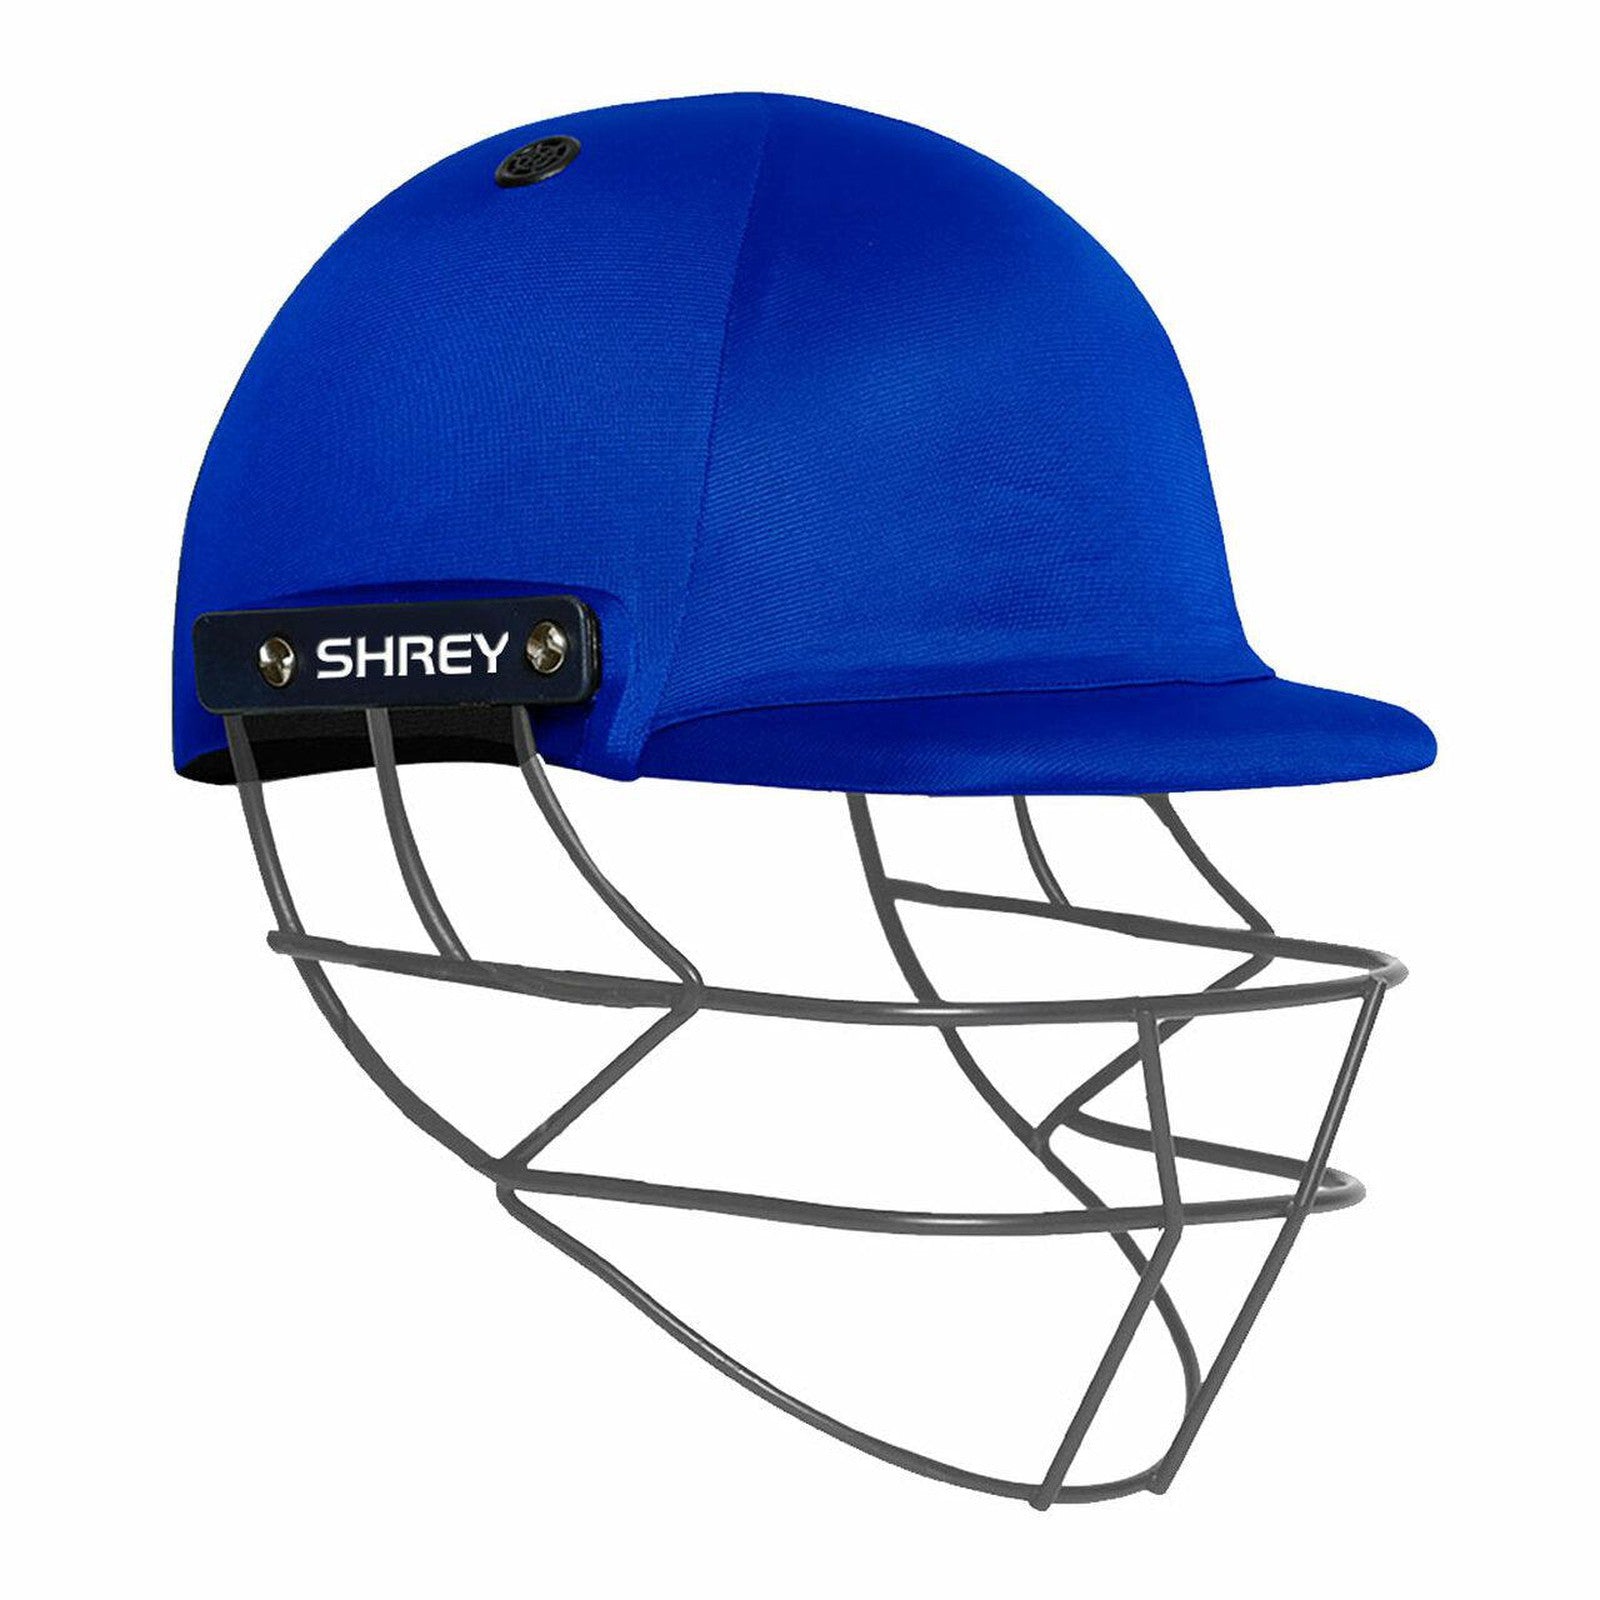 Shrey Performance 2.0 Cricket Helmet With Mild Steel - Royal Blue Senior